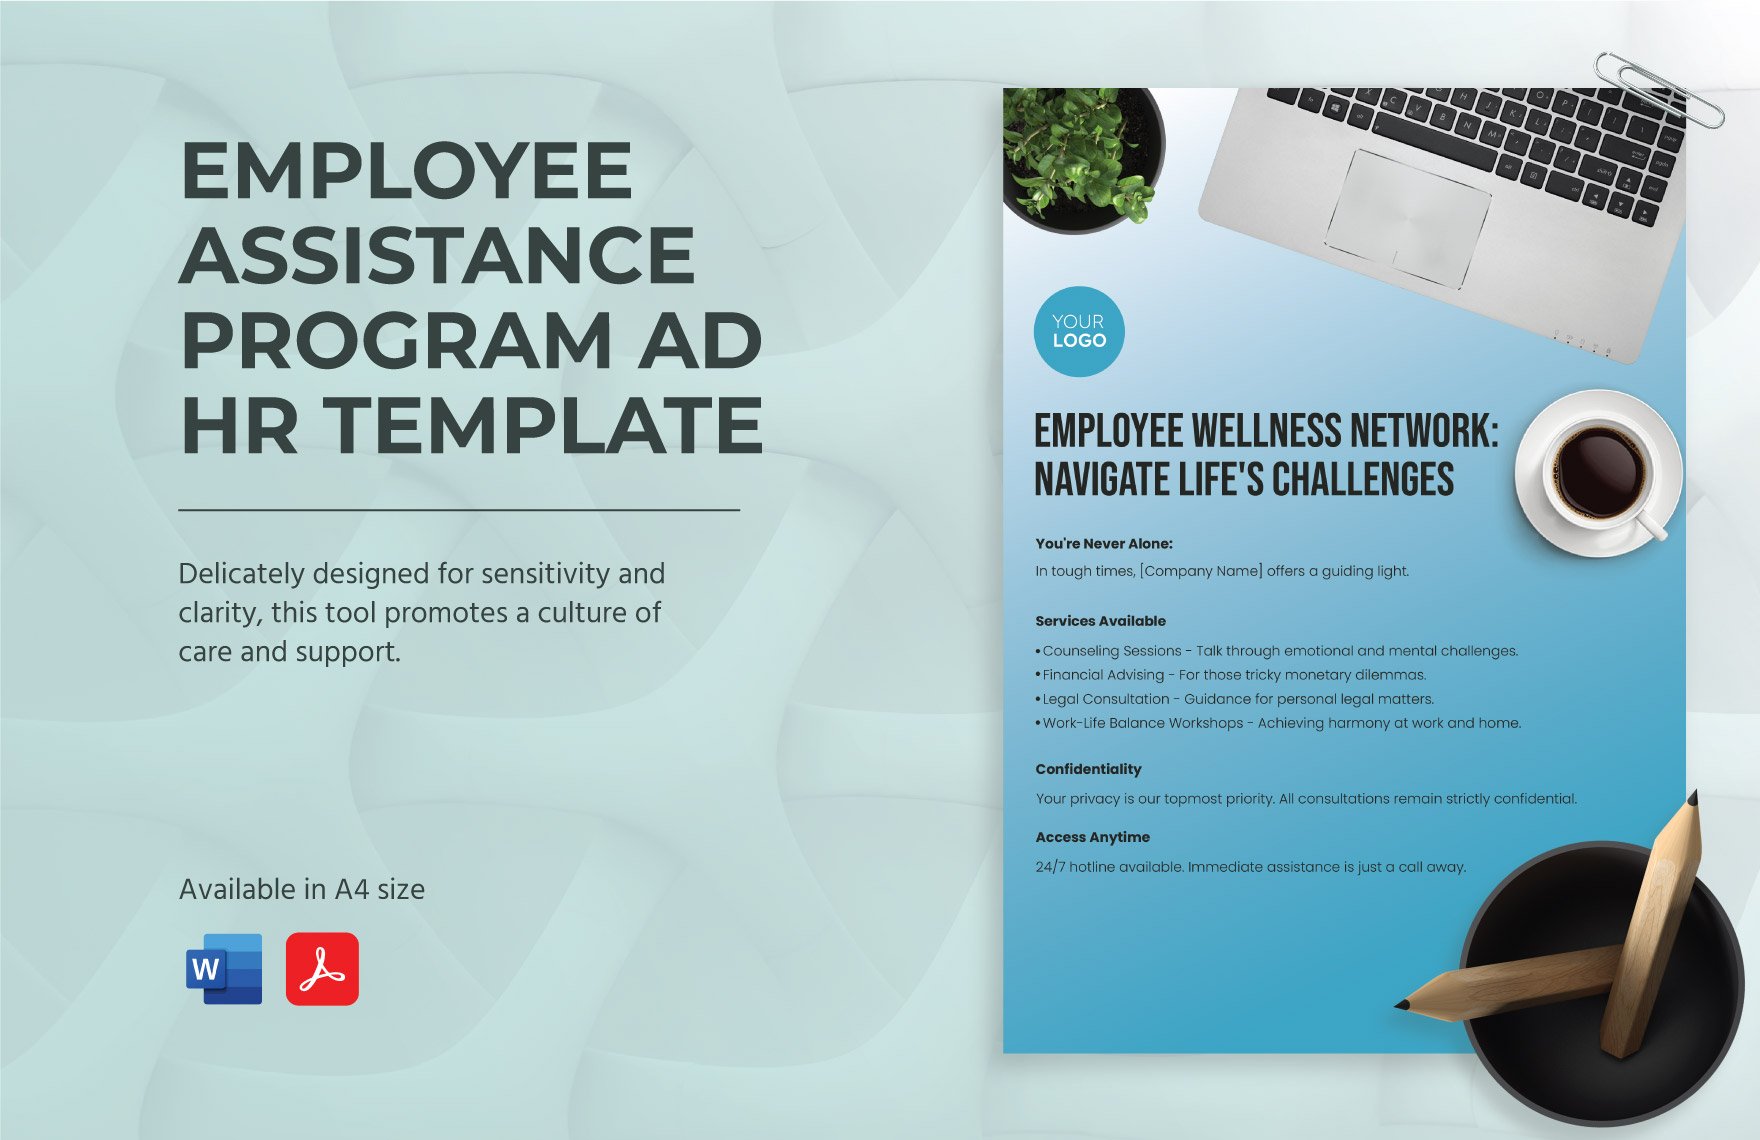 Employee Assistance Program Ad HR Template